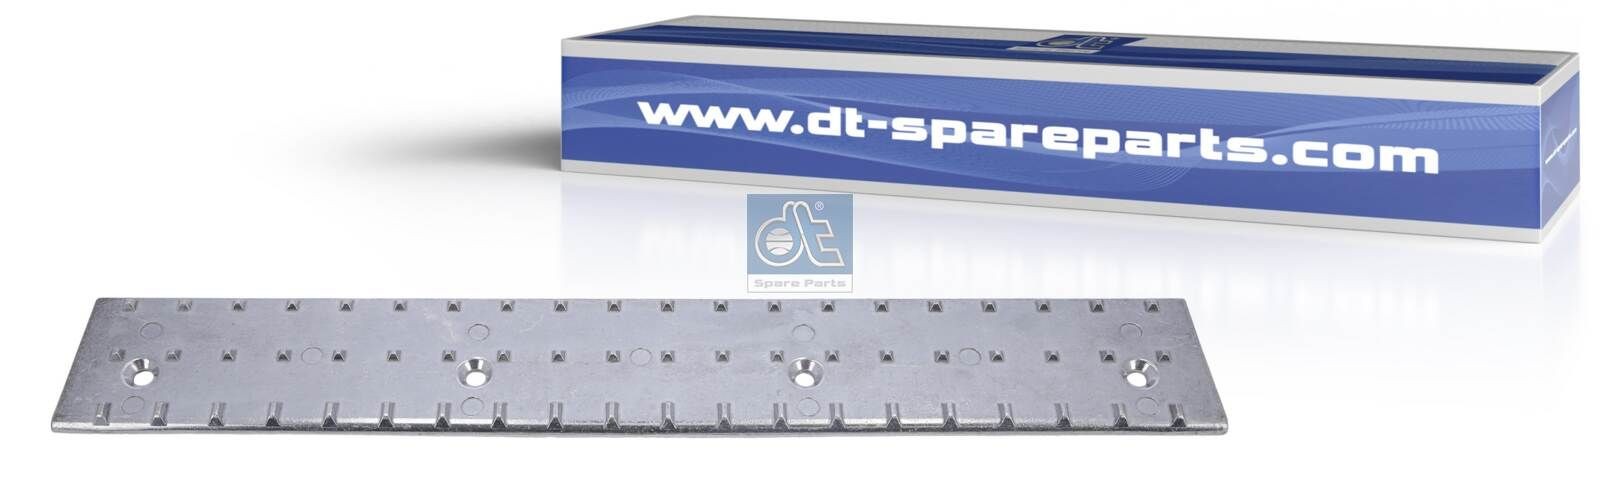 5.16094 DT Spare Parts Trittbrett DAF 85